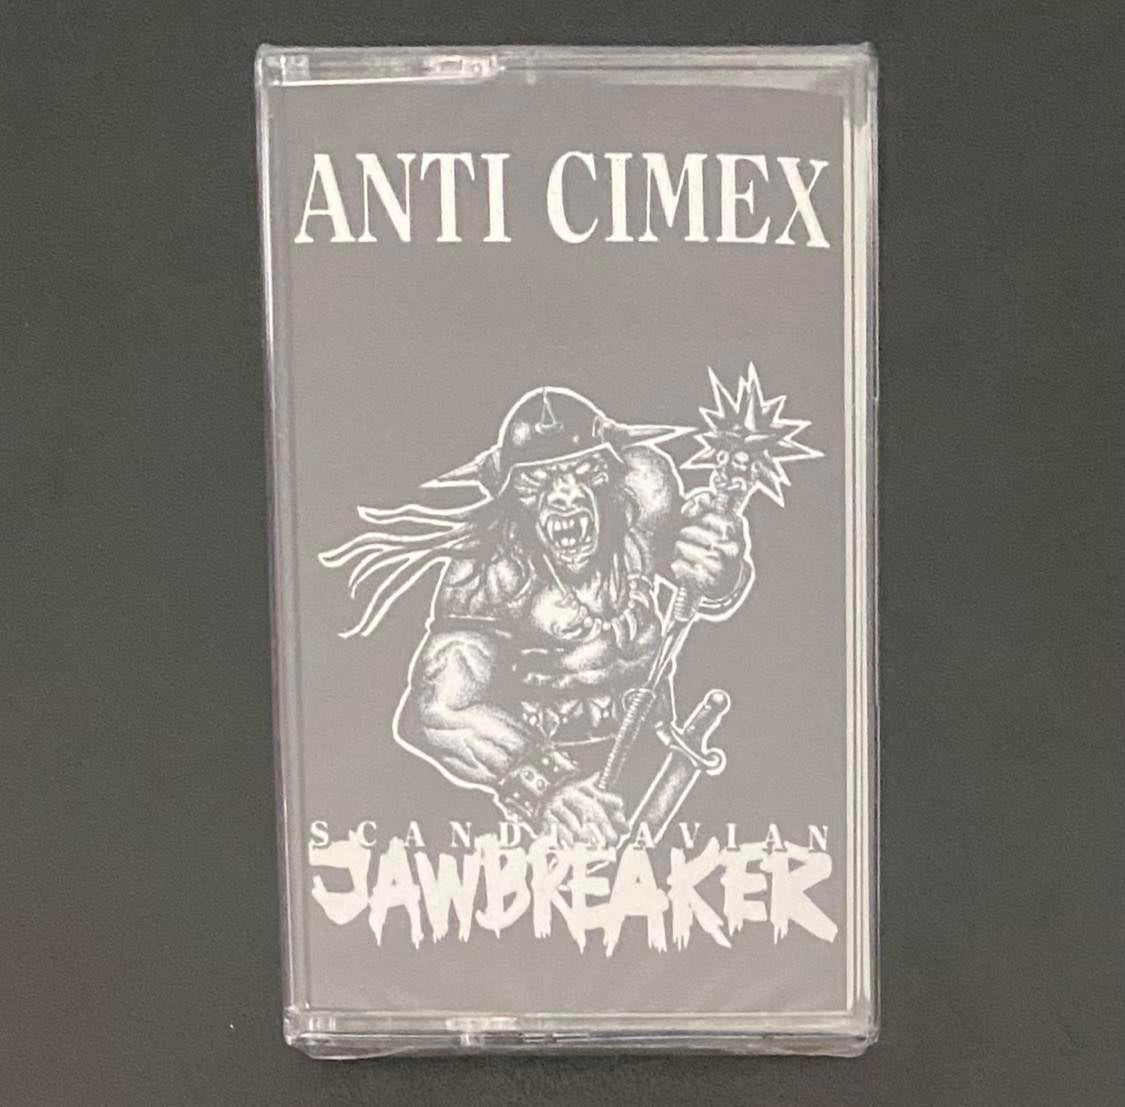 ANTI-CIMEX – Scandinavian Jawbreaker Cassette